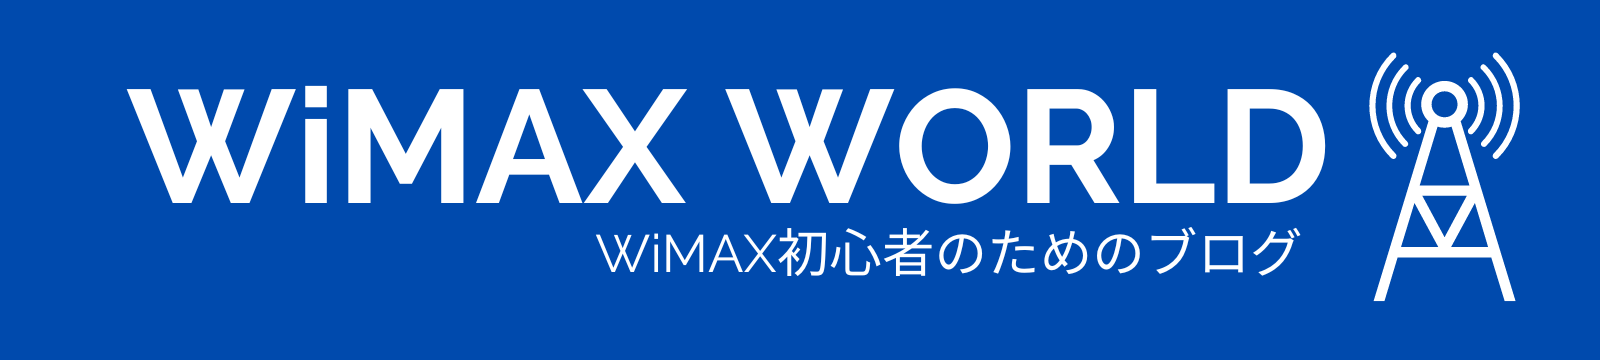 WiMAX WORLD